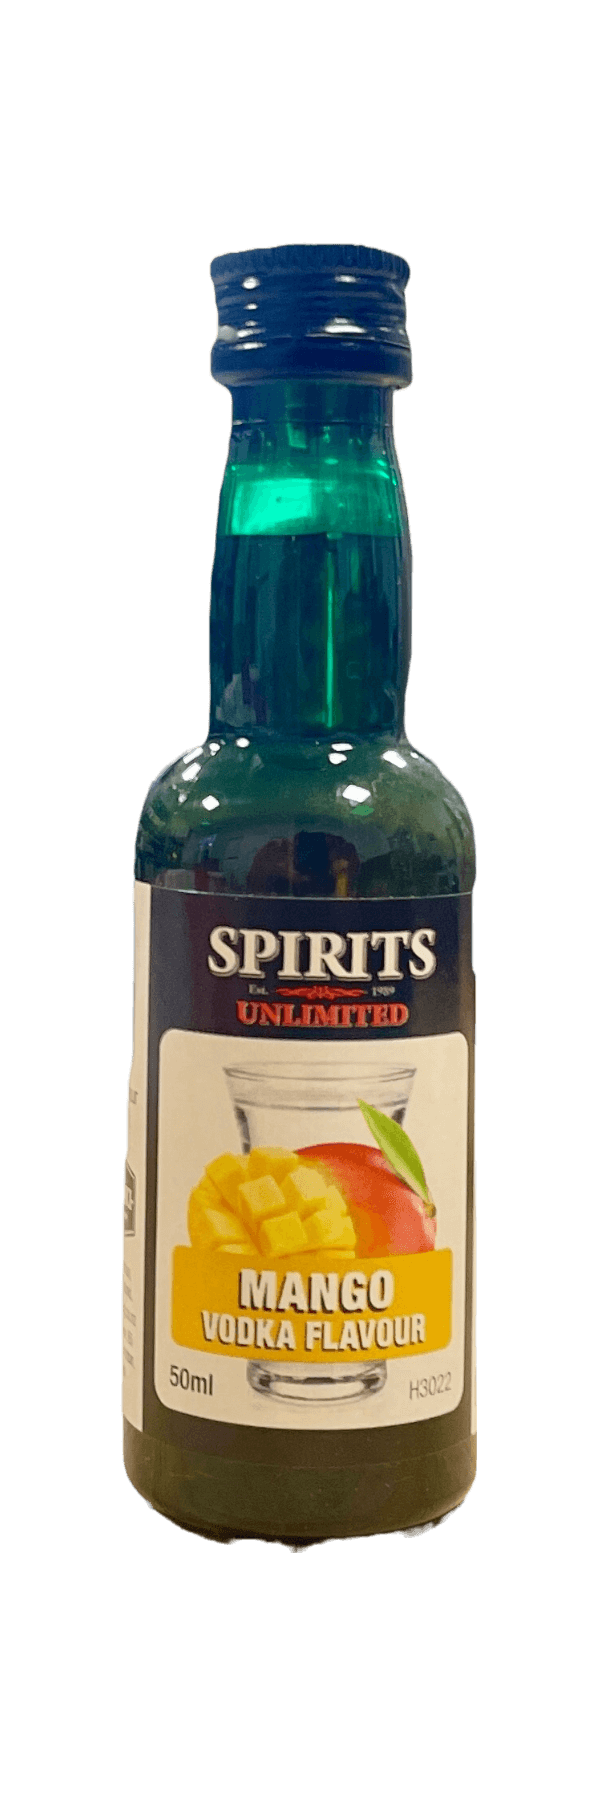 Spirits Unlimited Fruit Vodka - Mango - 50ml - All Things Fermented | Home Brew Shop NZ | Supplies | Equipment